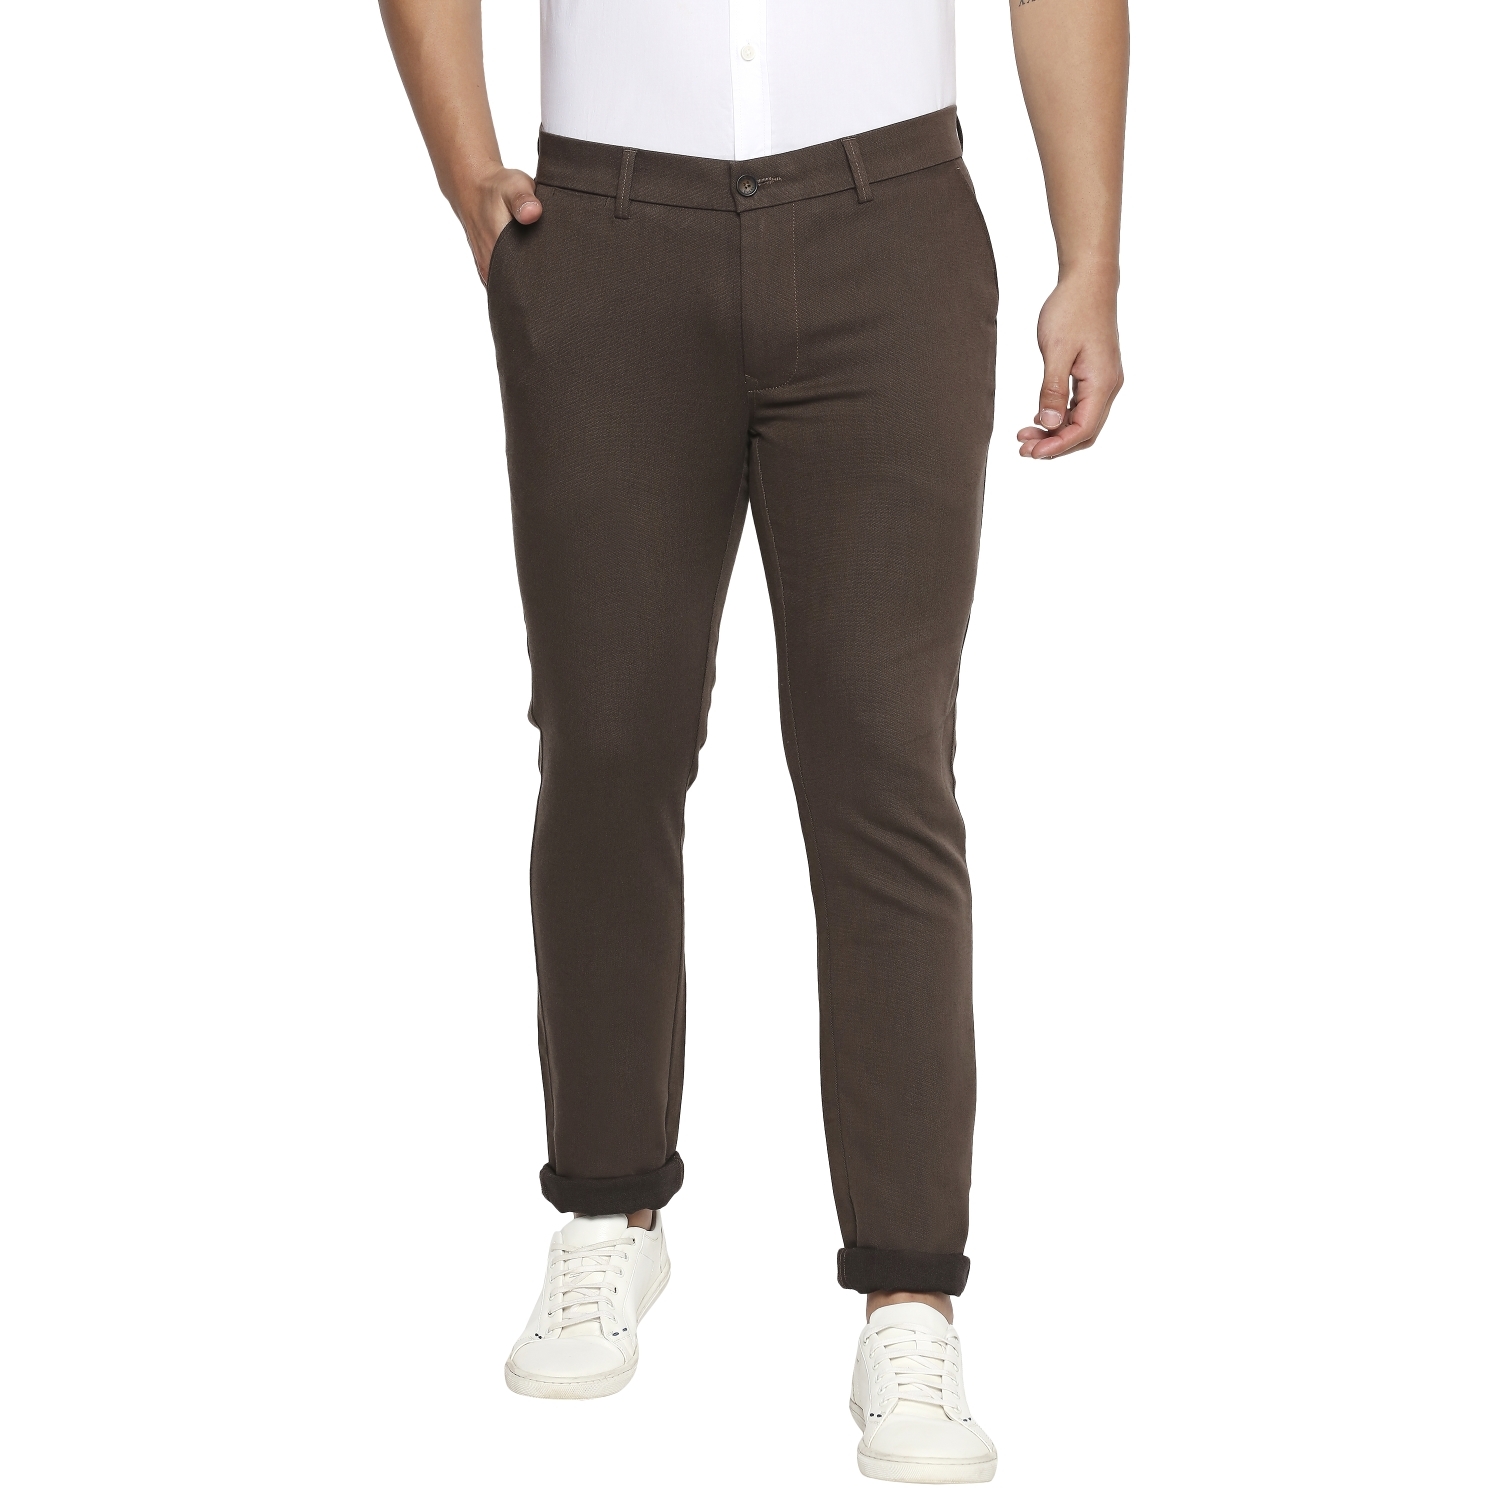 Basics | Basics Tapered Fit Cub Brown Stretch Trouser